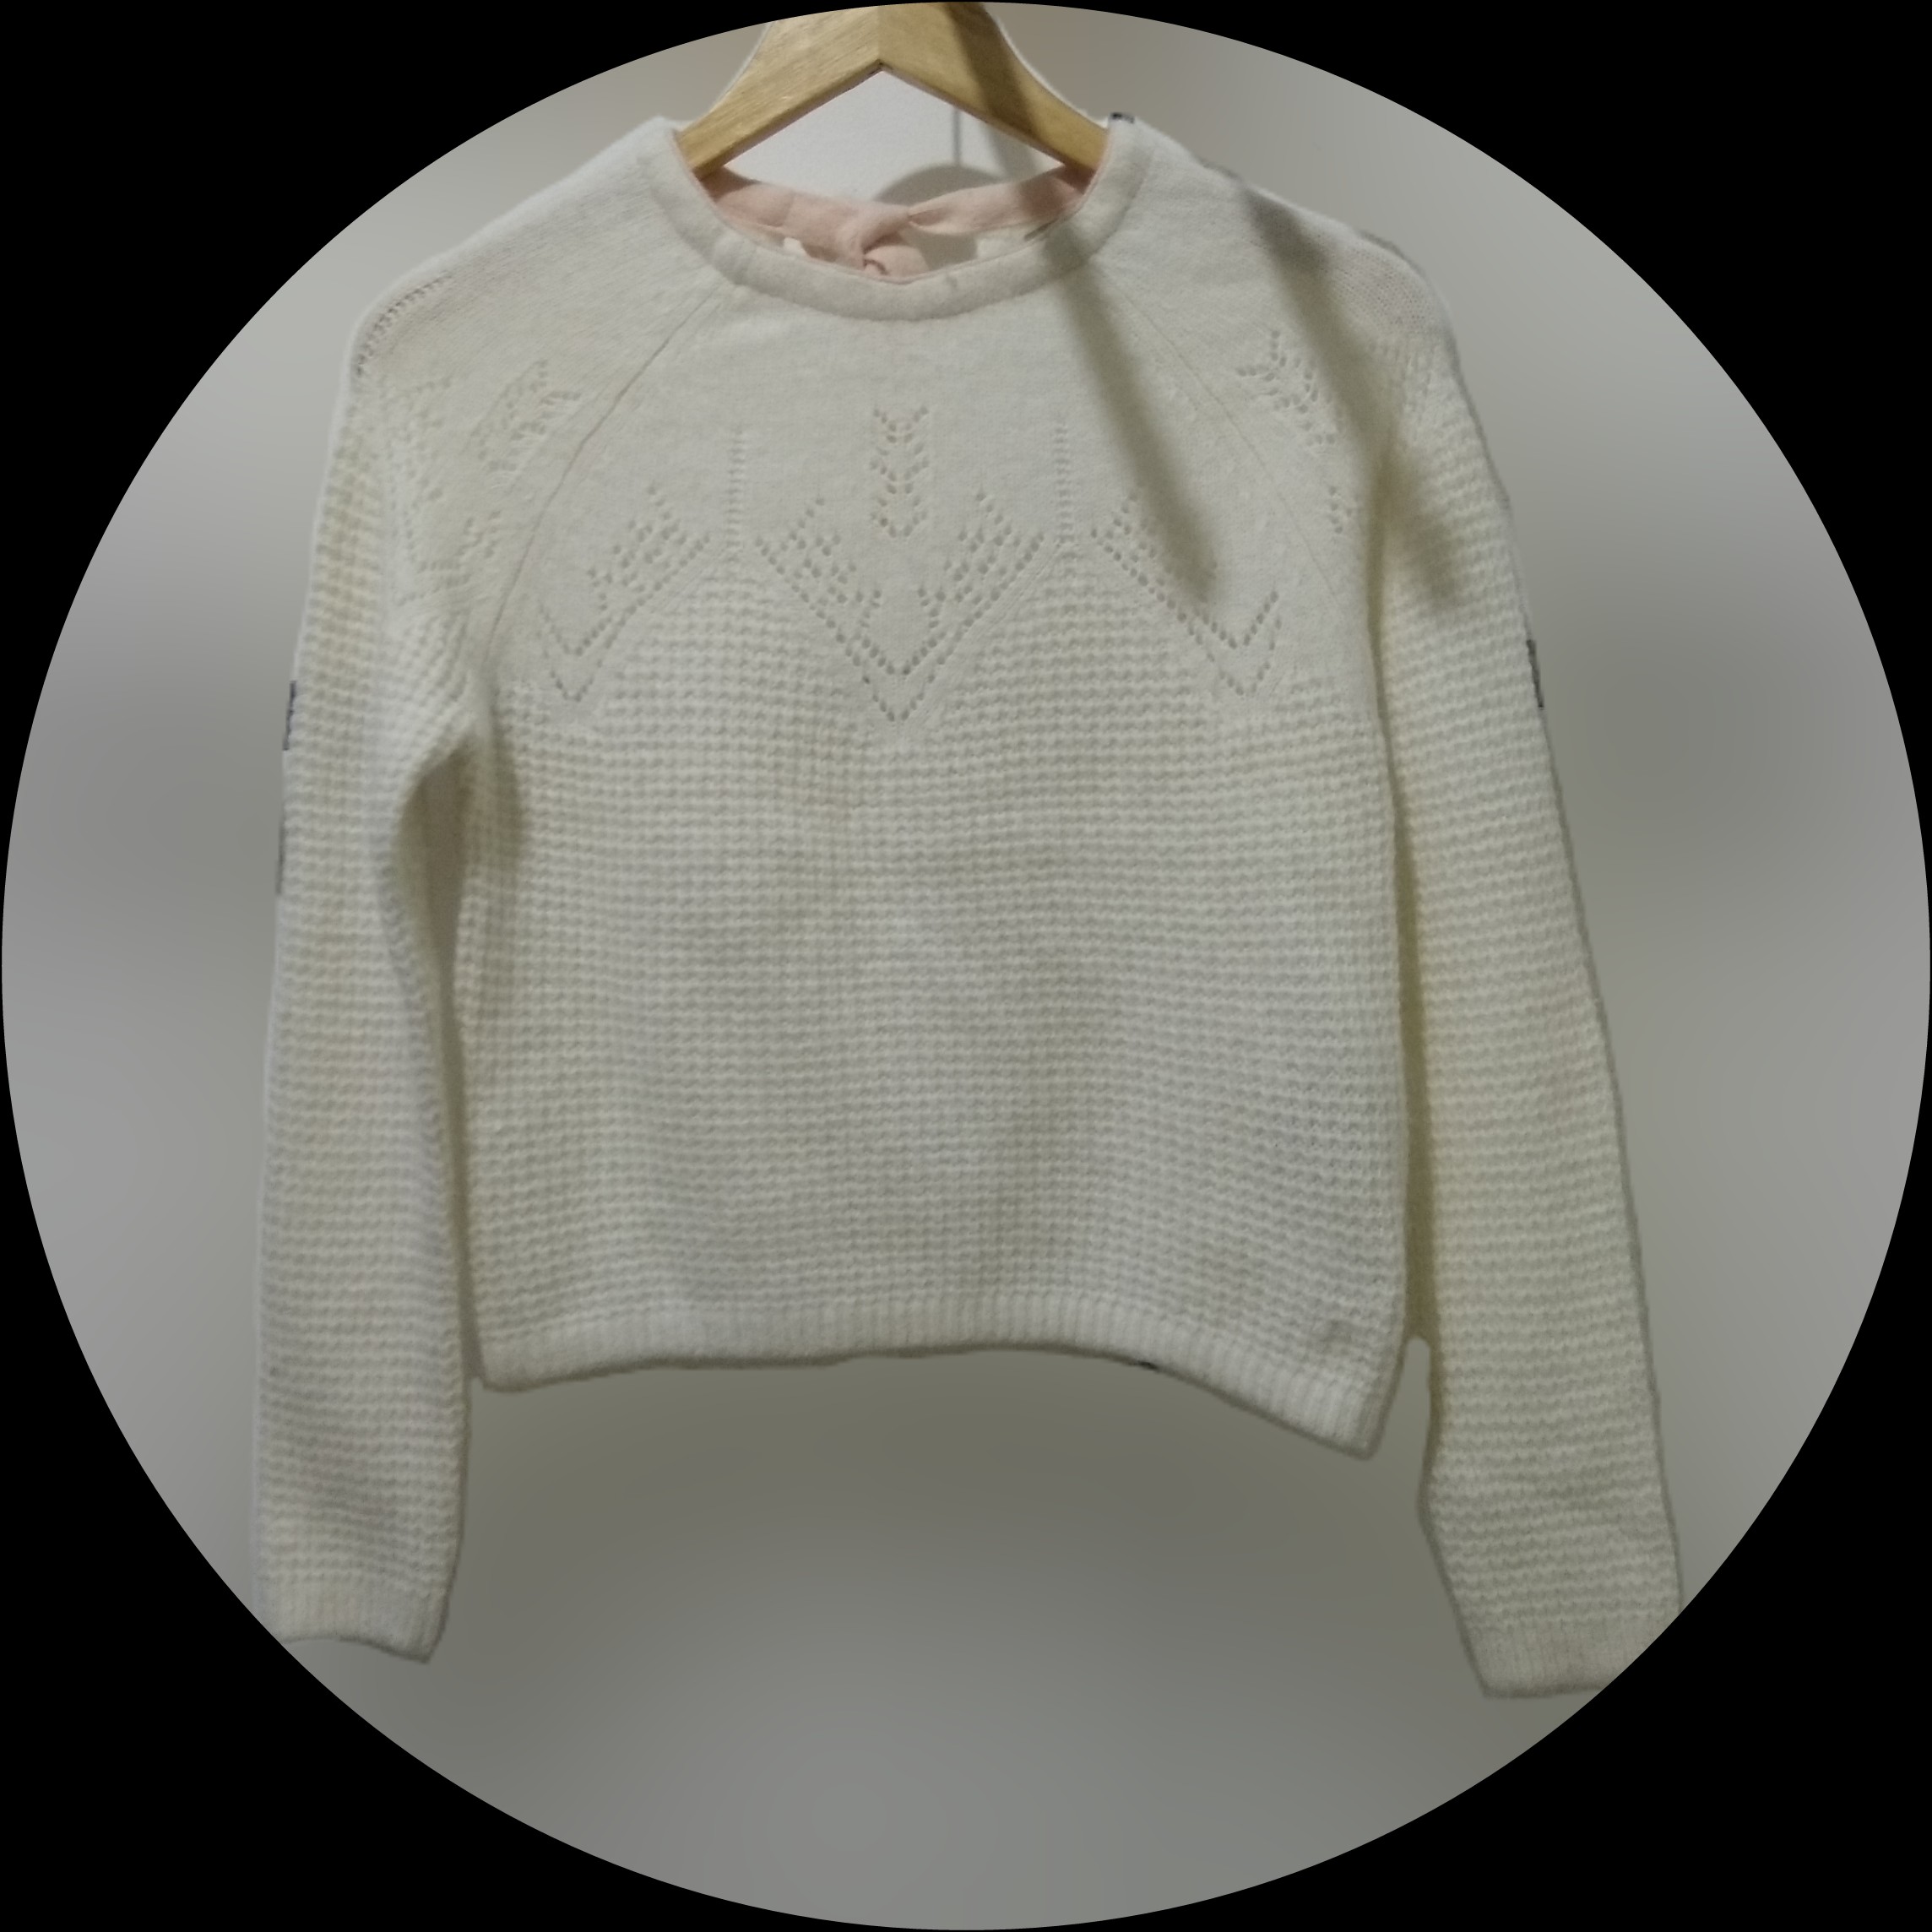  Sweater  Rajut  Premium Toko Busana Pakaian Wanita